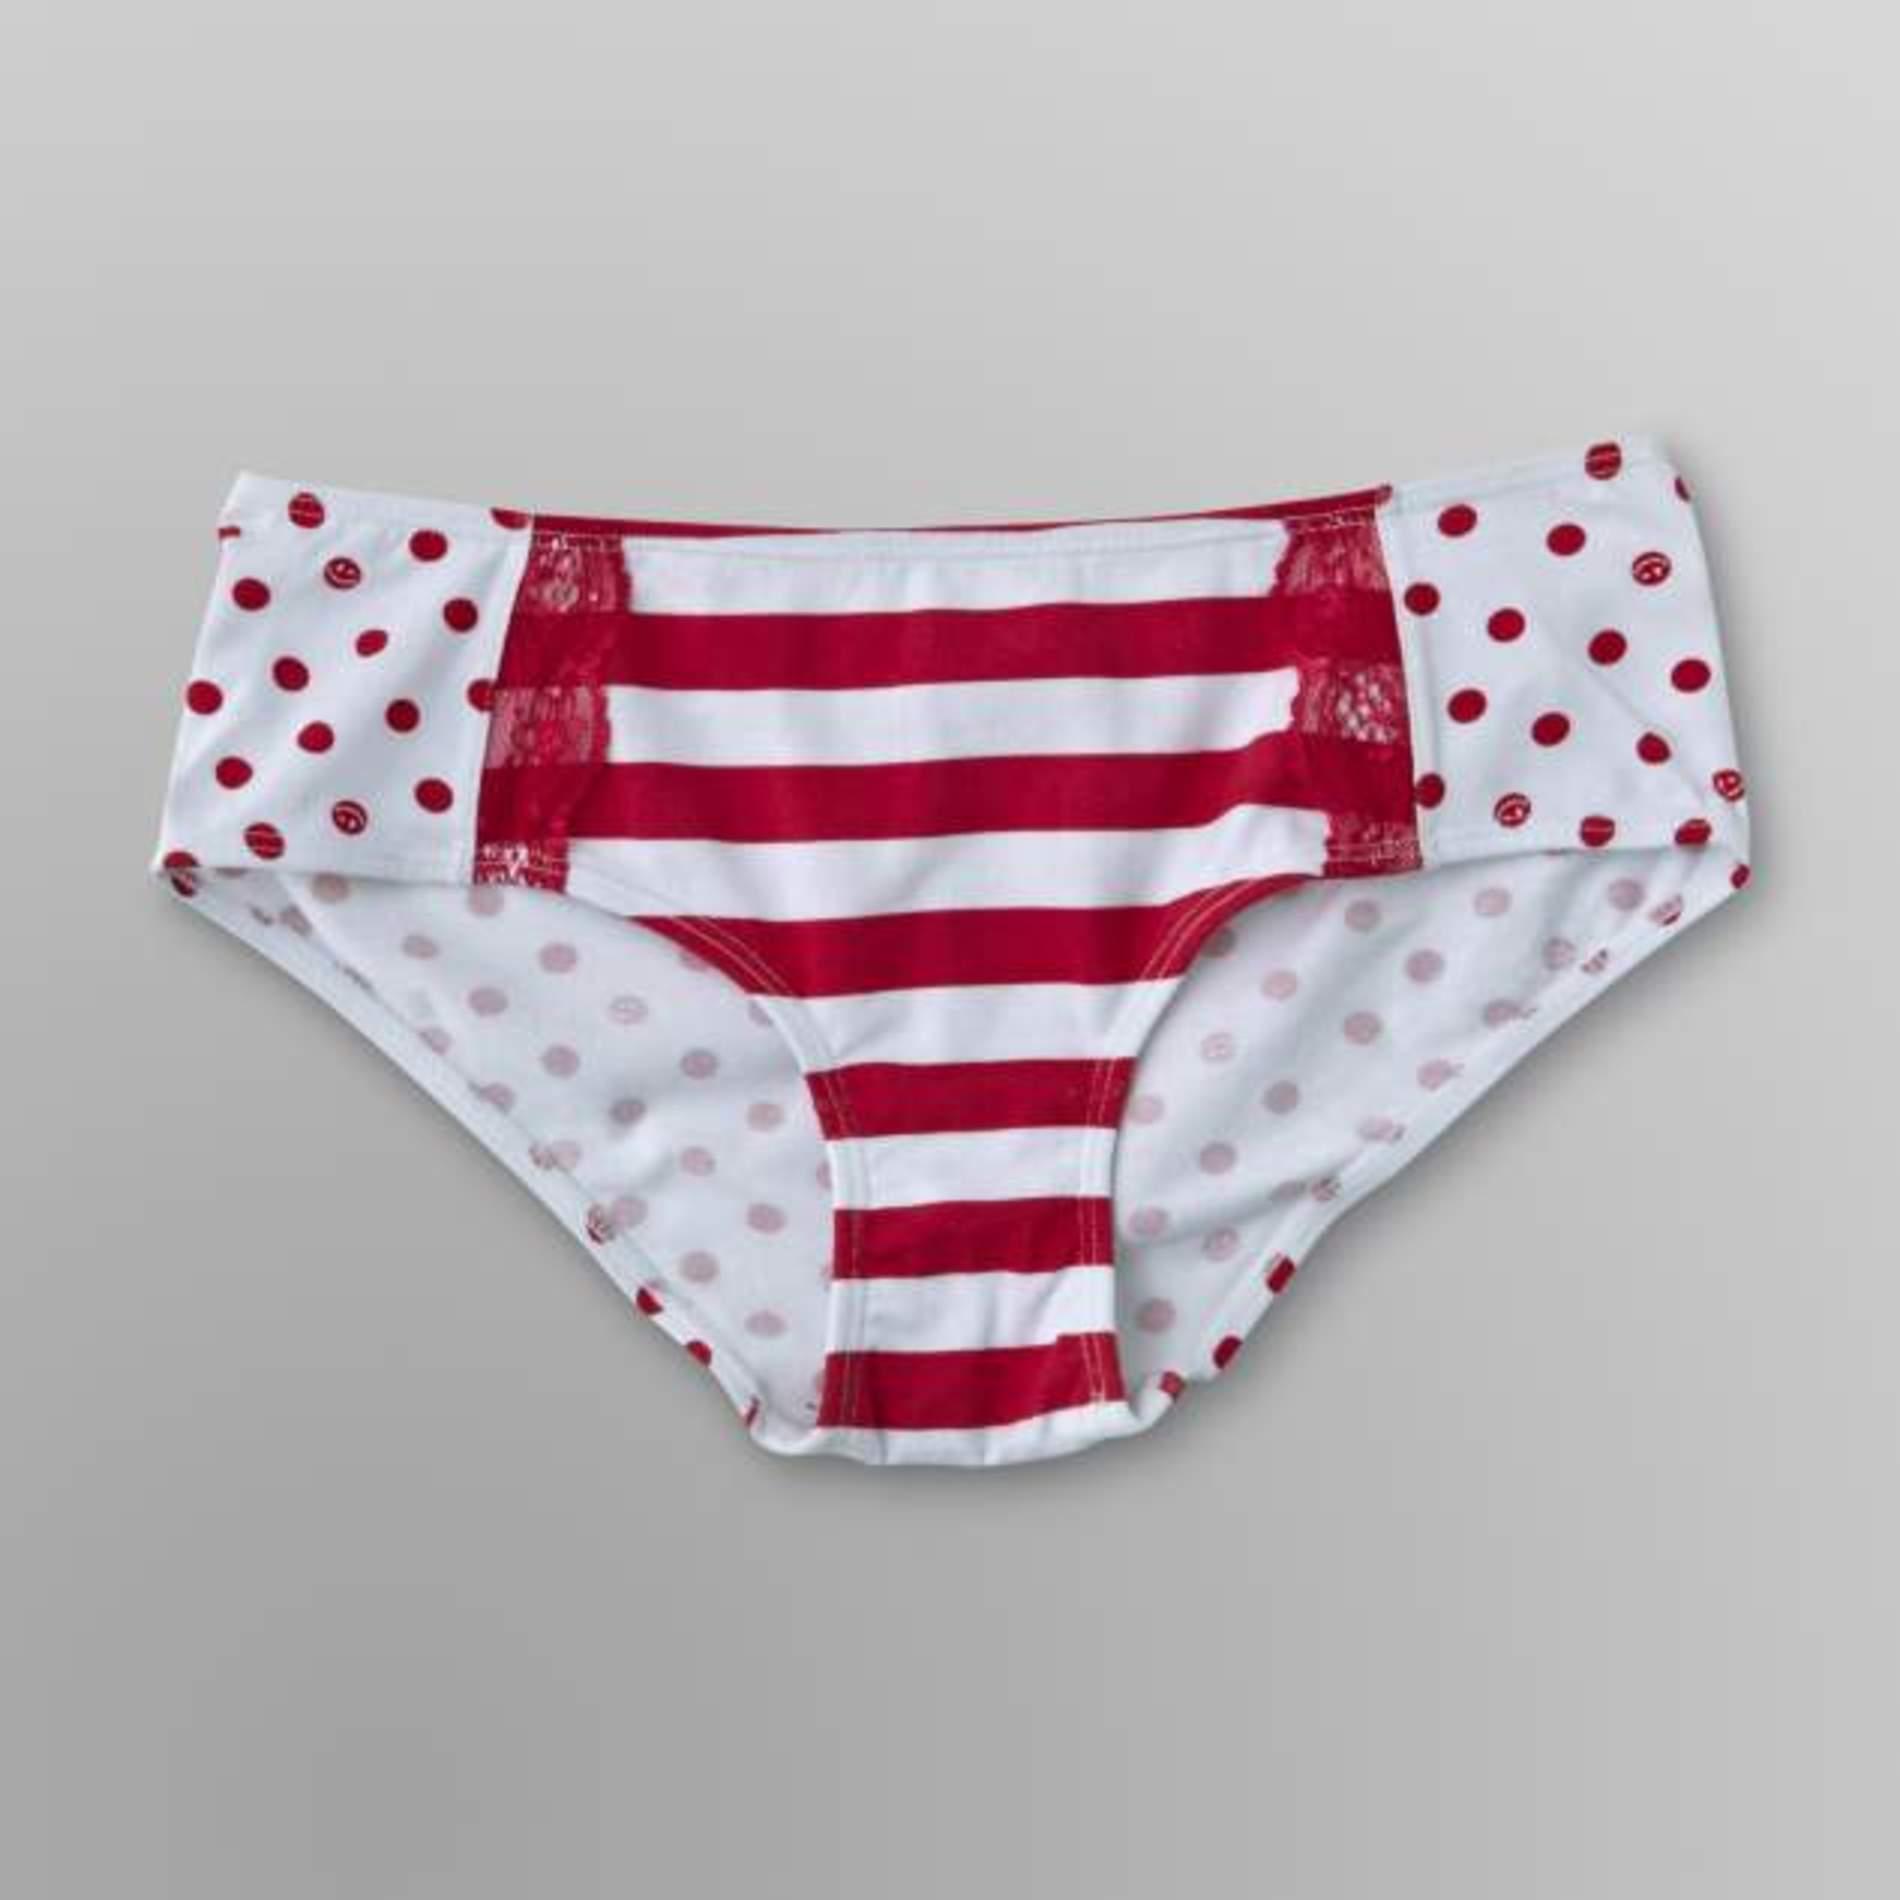 Joe Boxer Women's Hipster Panties - Stripes & Polka Dots